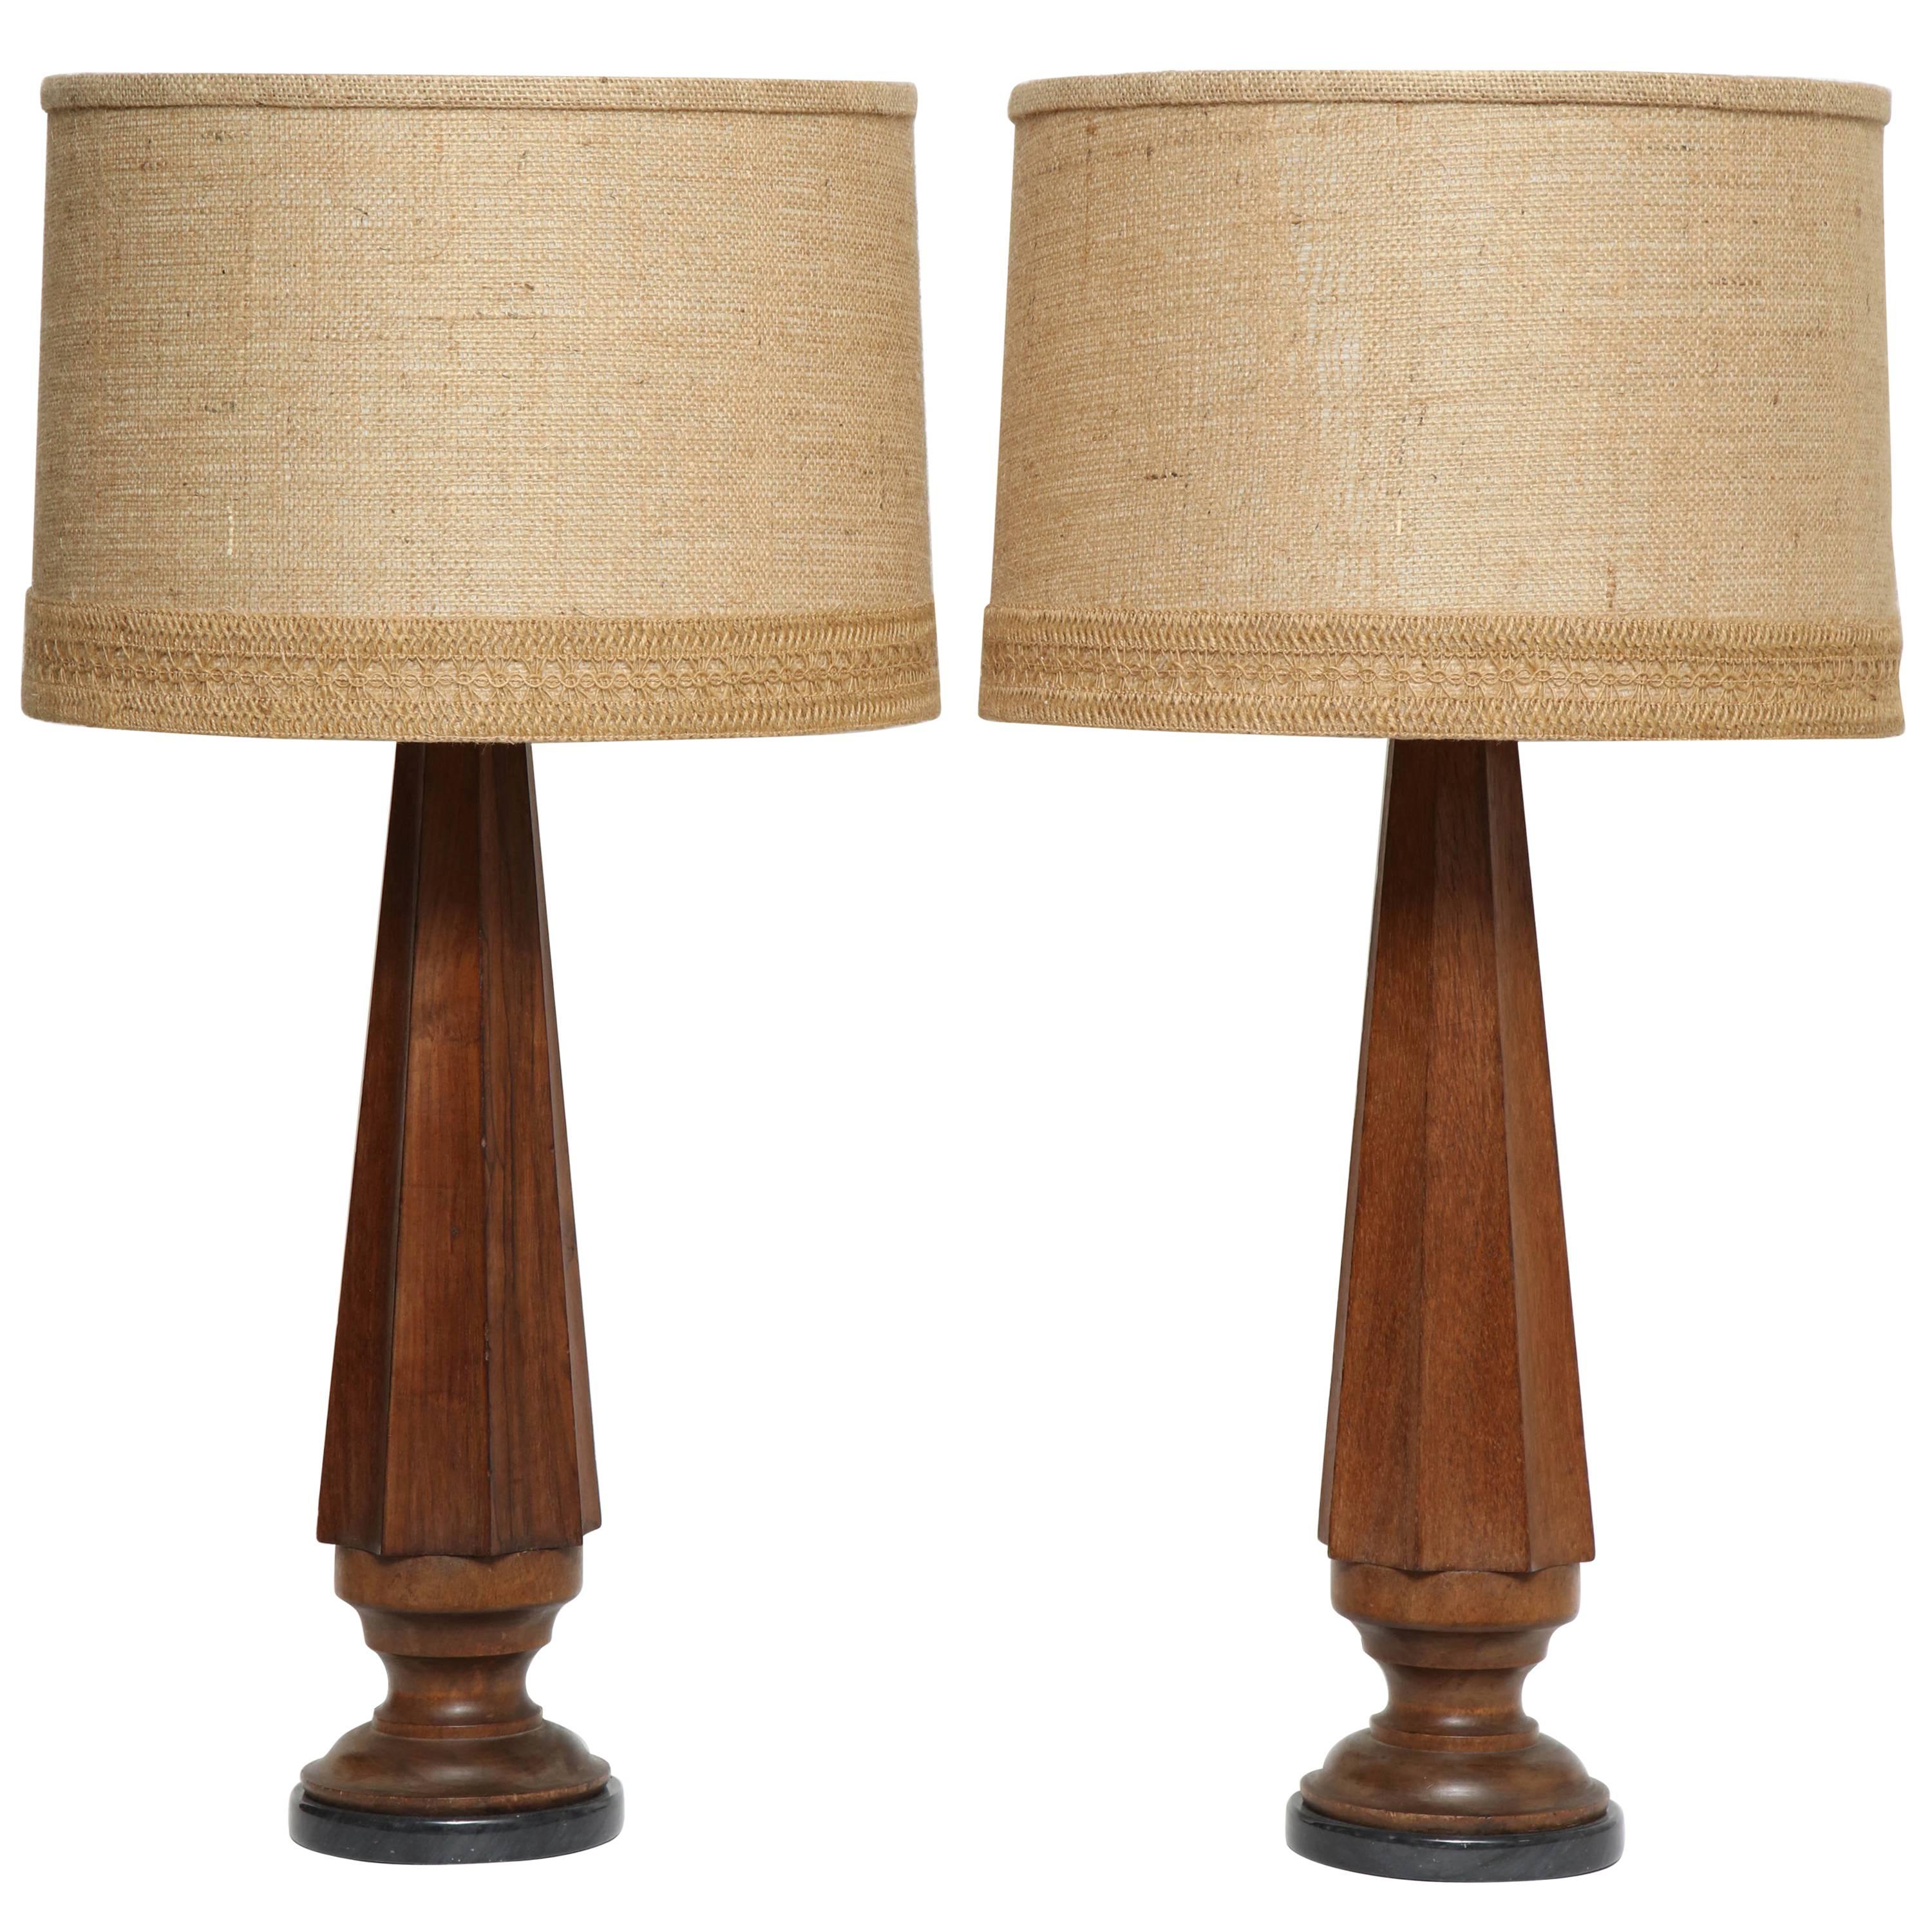 Pair of Antique Wood Column Lamps